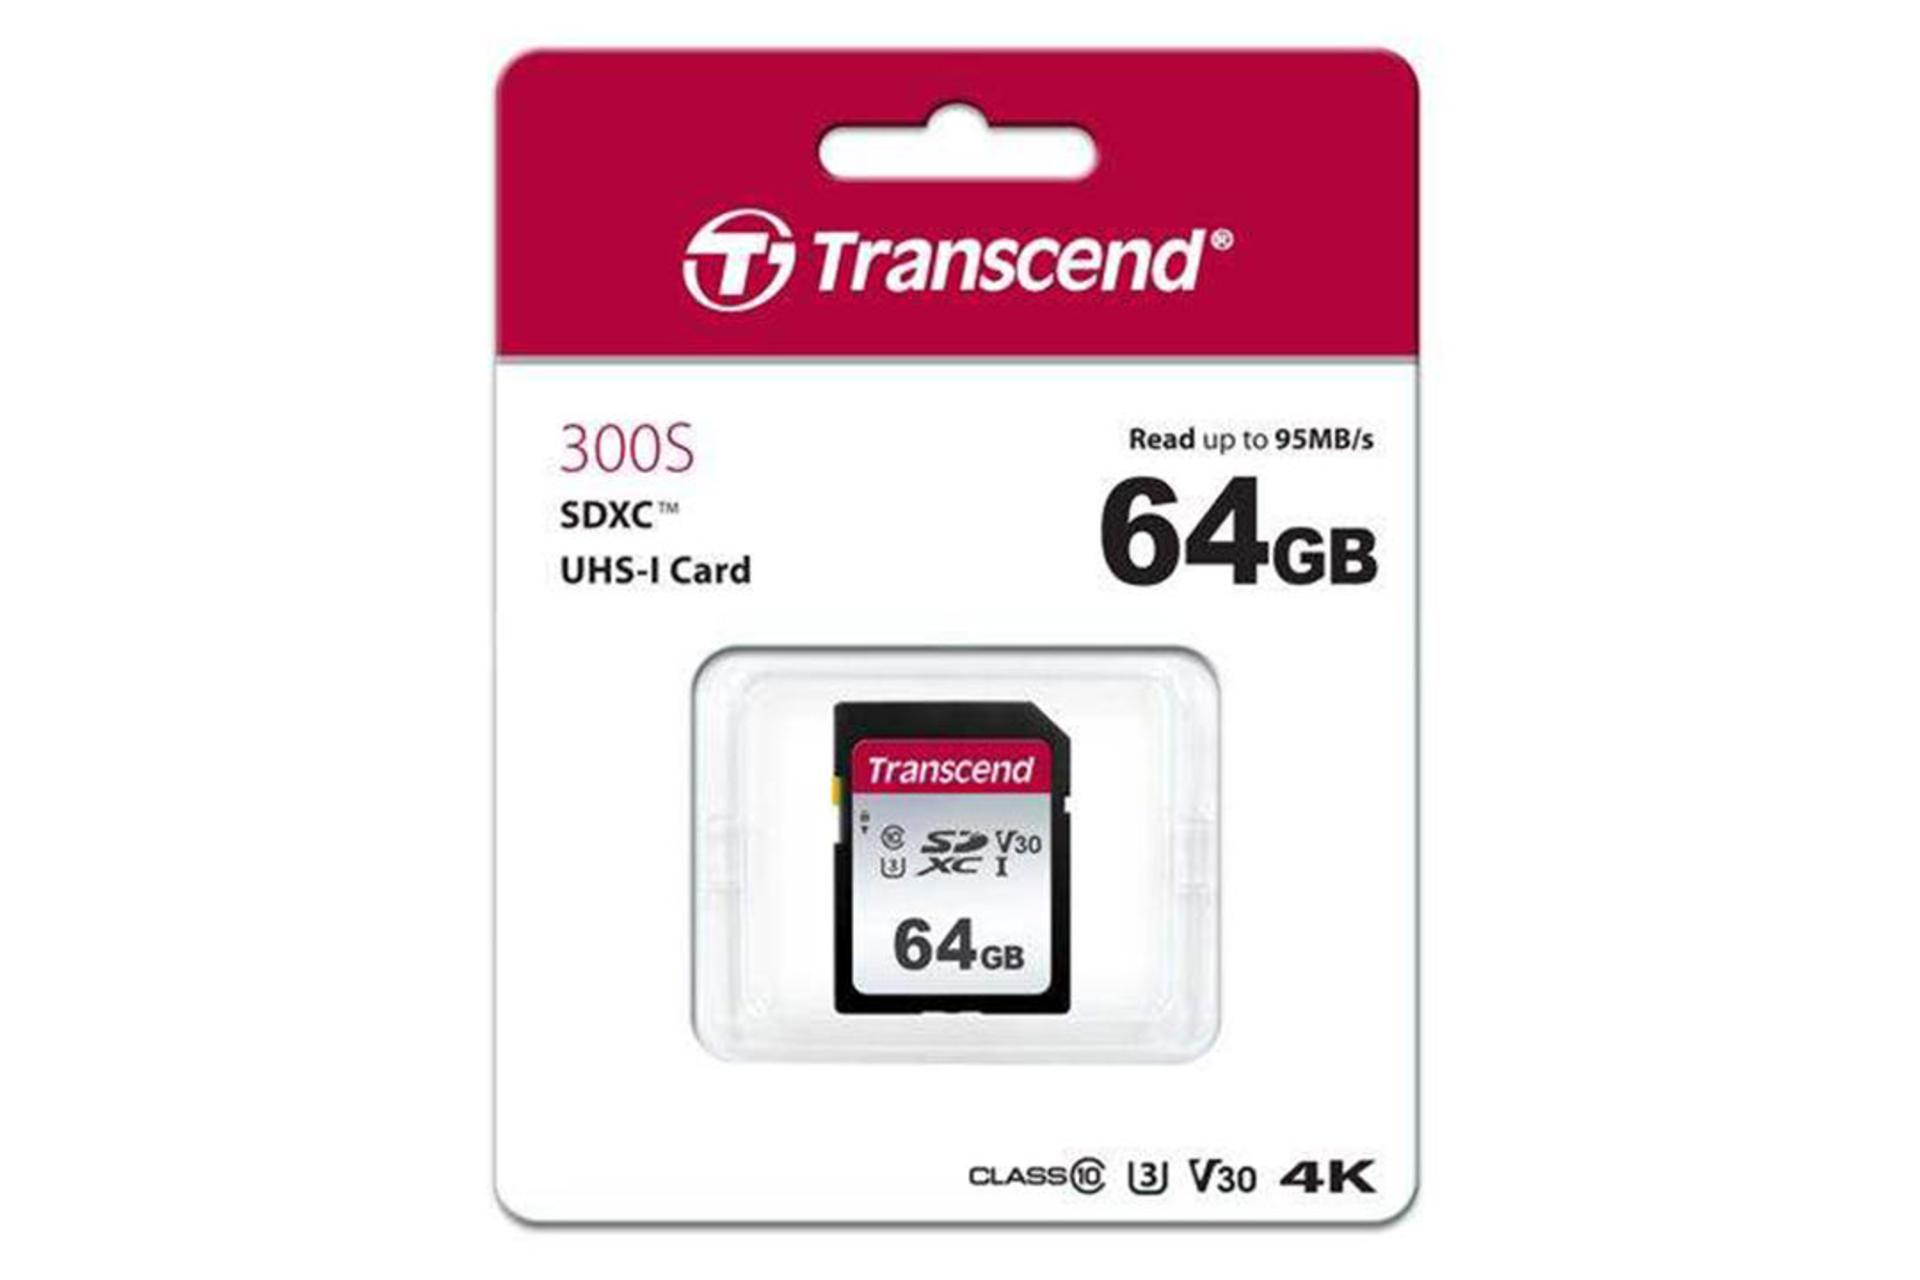 Transcend 300S microSDXC Class 10 UHS-I U1 64GB